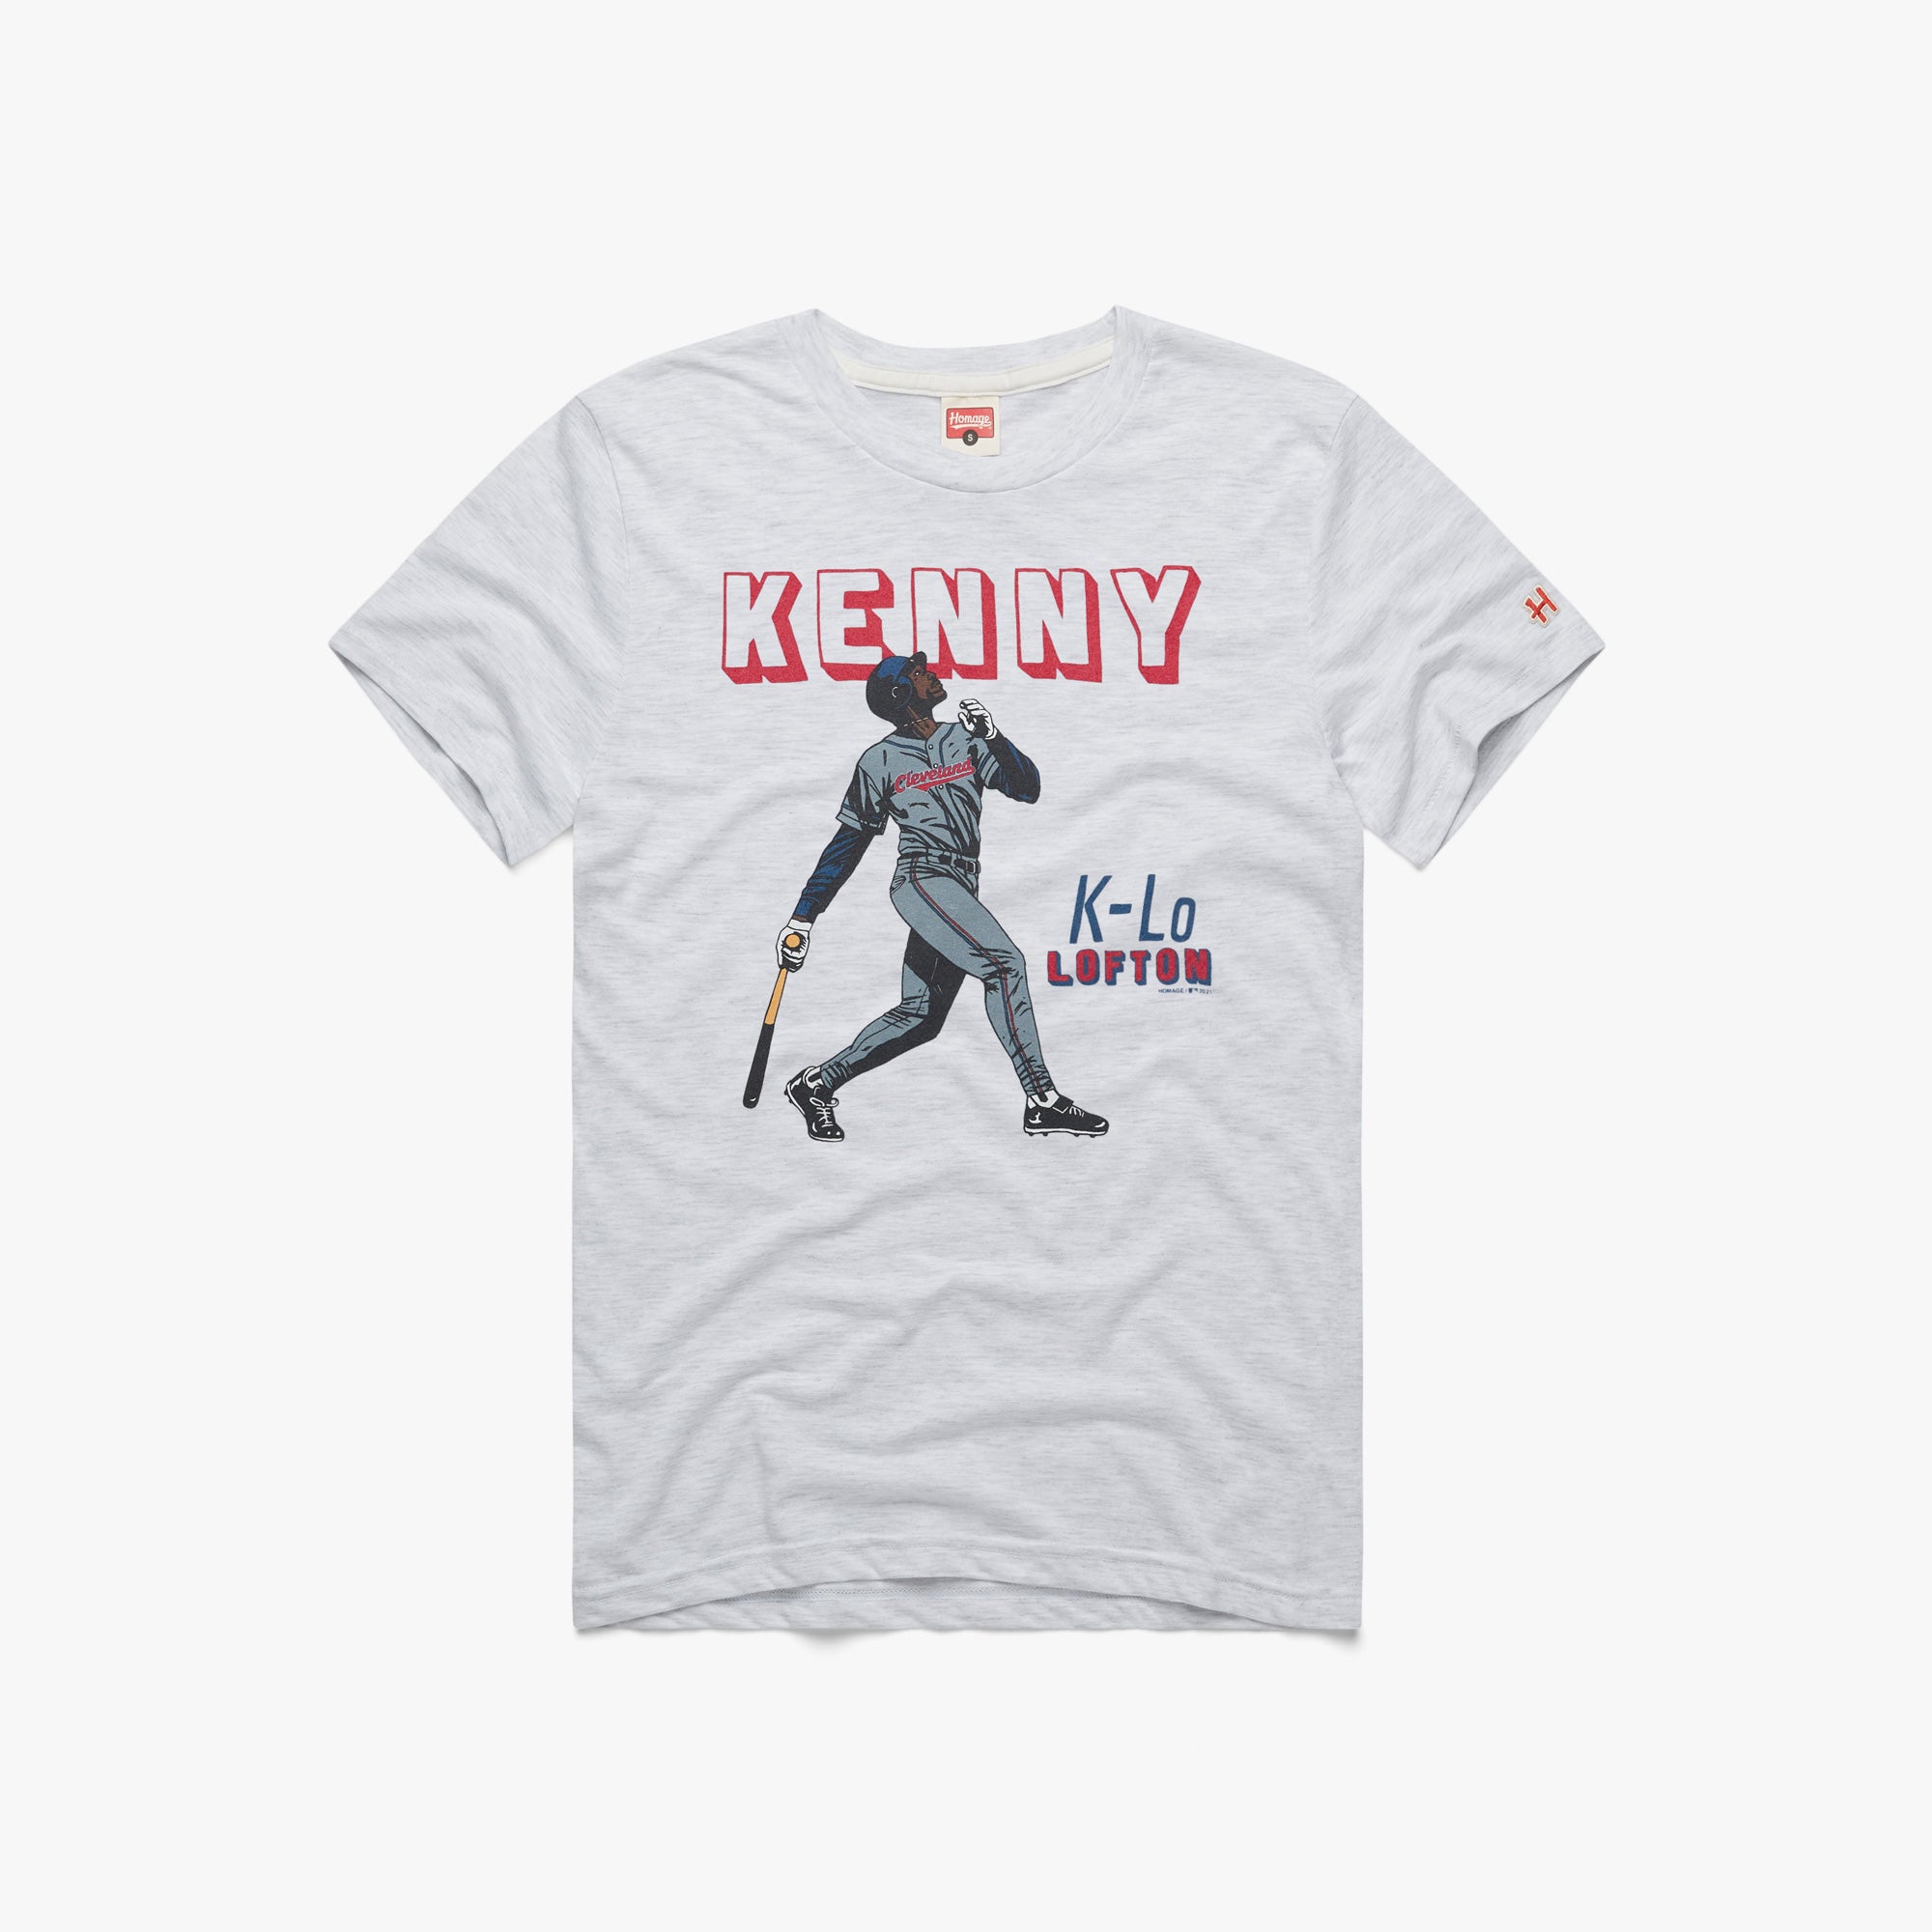 Cleveland Indians History: Kenny Lofton Runs into Record Books